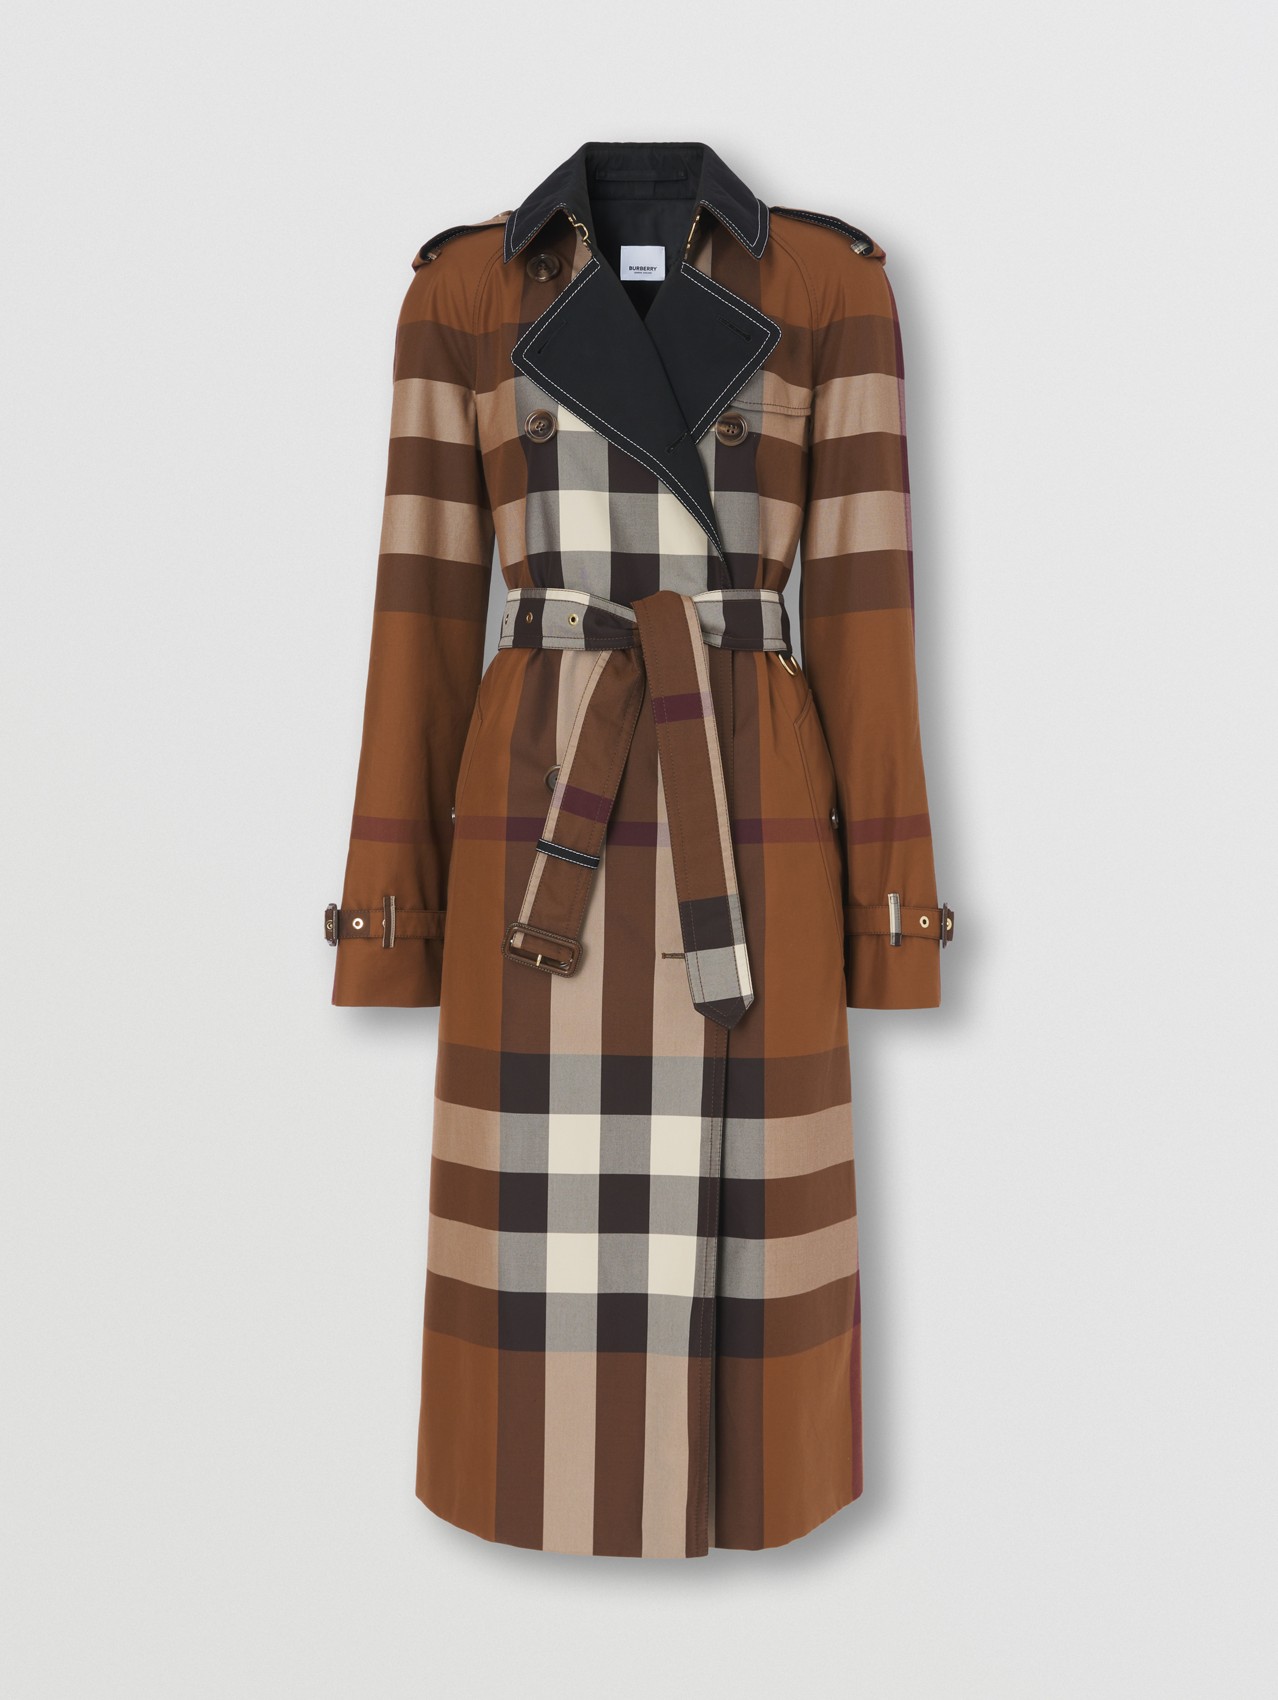 Trench coat de algodão xadrez com recorte contrastante in Marrom Bétula Escuro